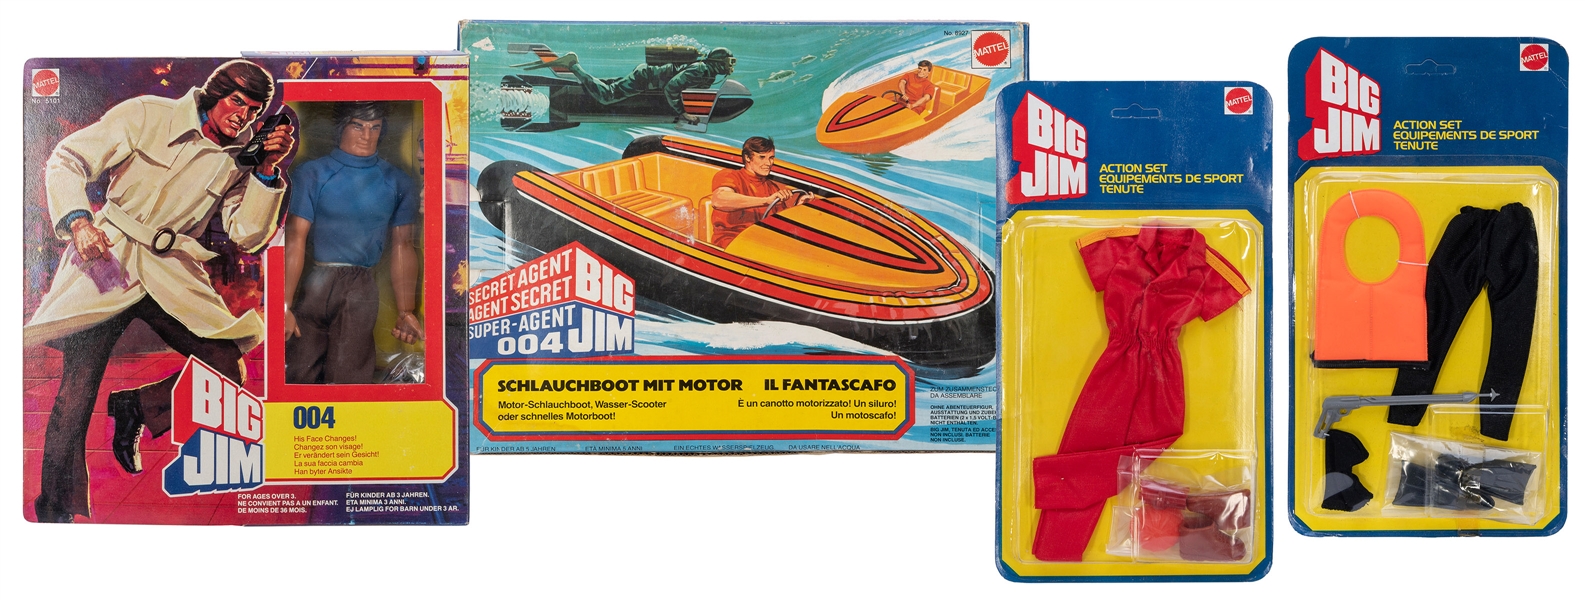  Mattel Big Jim 004 Action Figure, Action Sets, and Sea Jet....